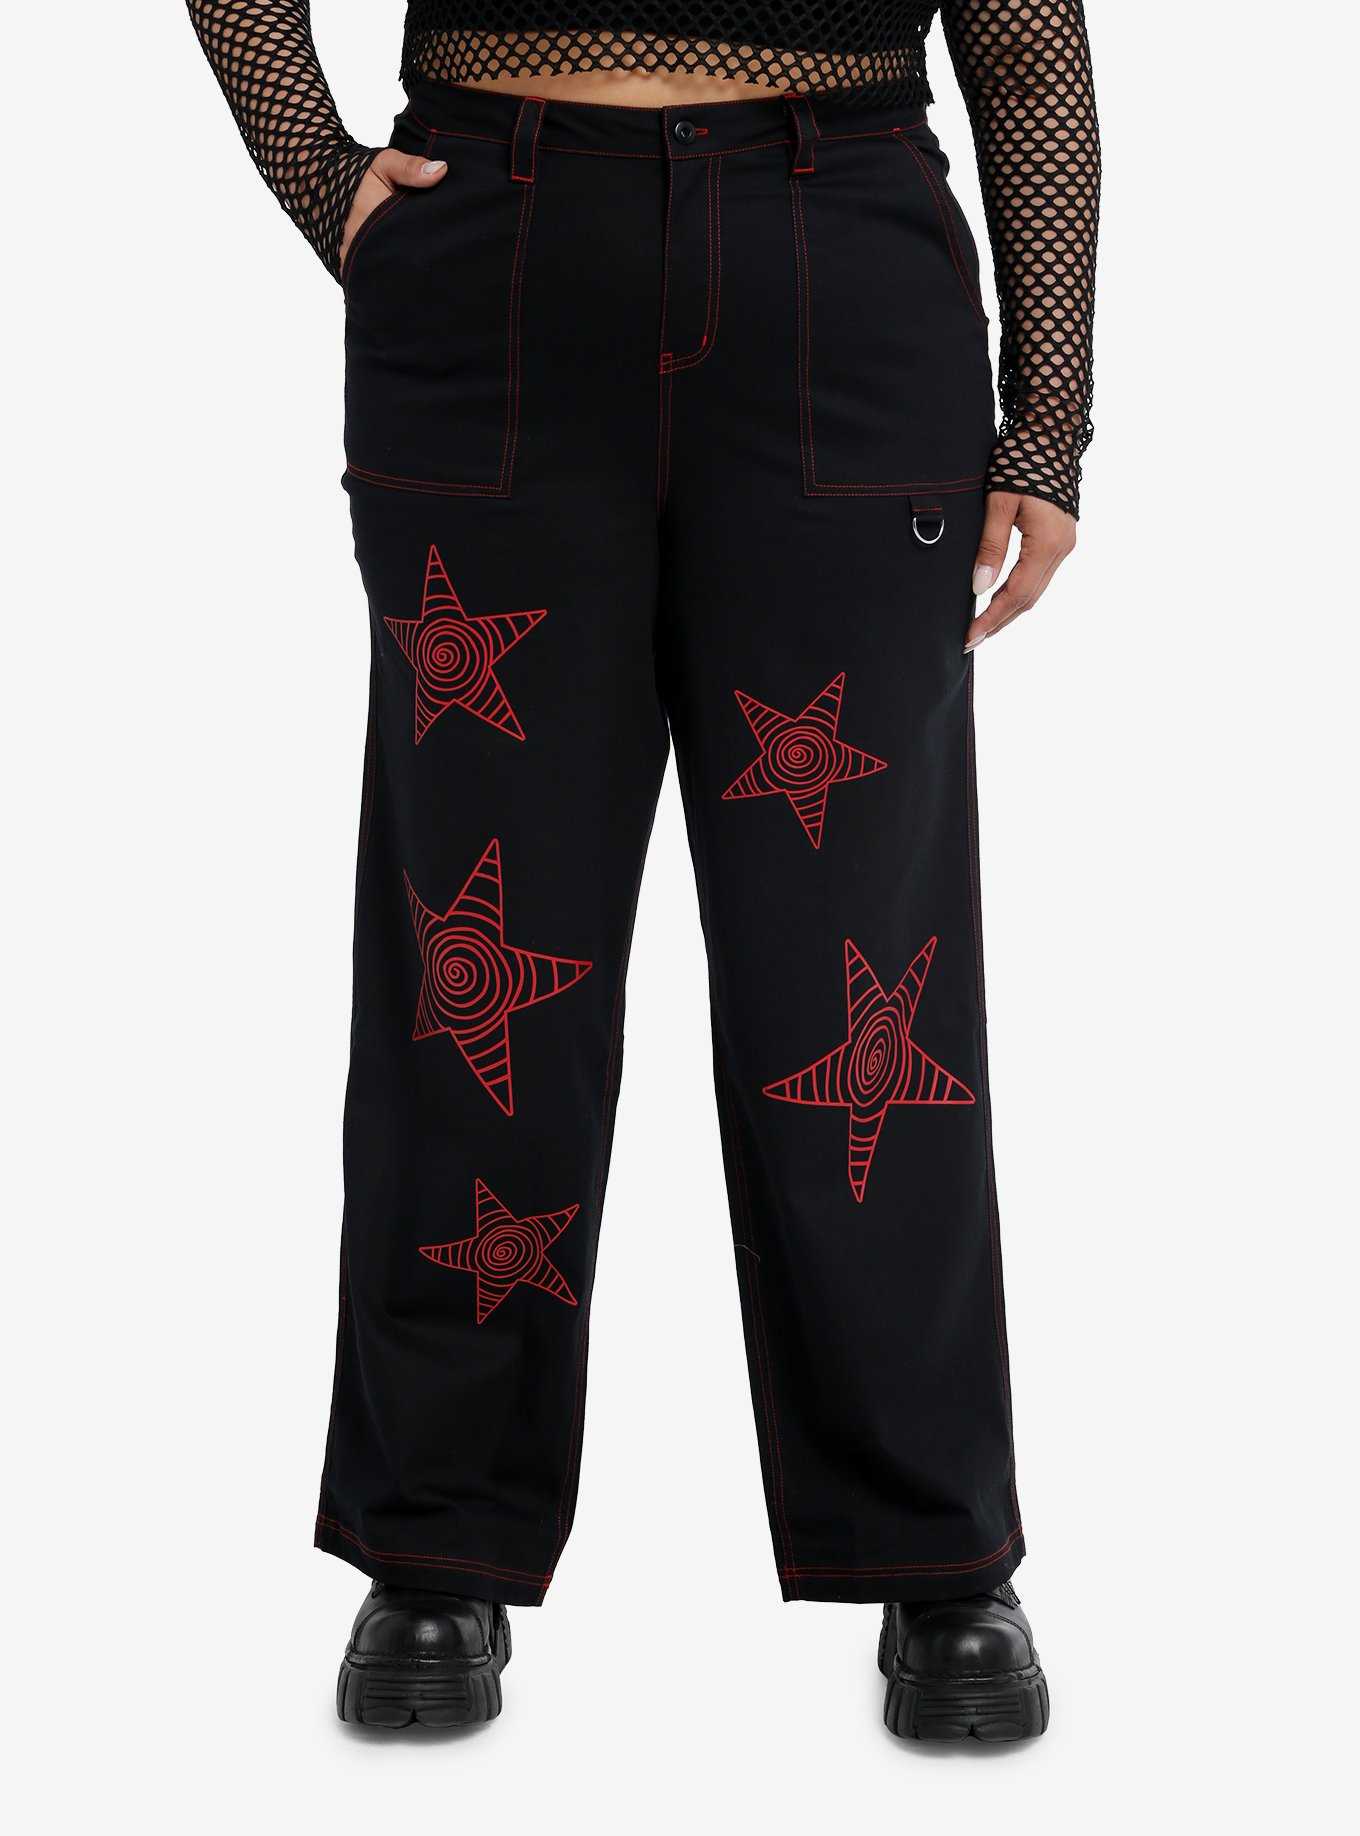 Black & Red Swirl Star Skater Pants Plus Size, , hi-res